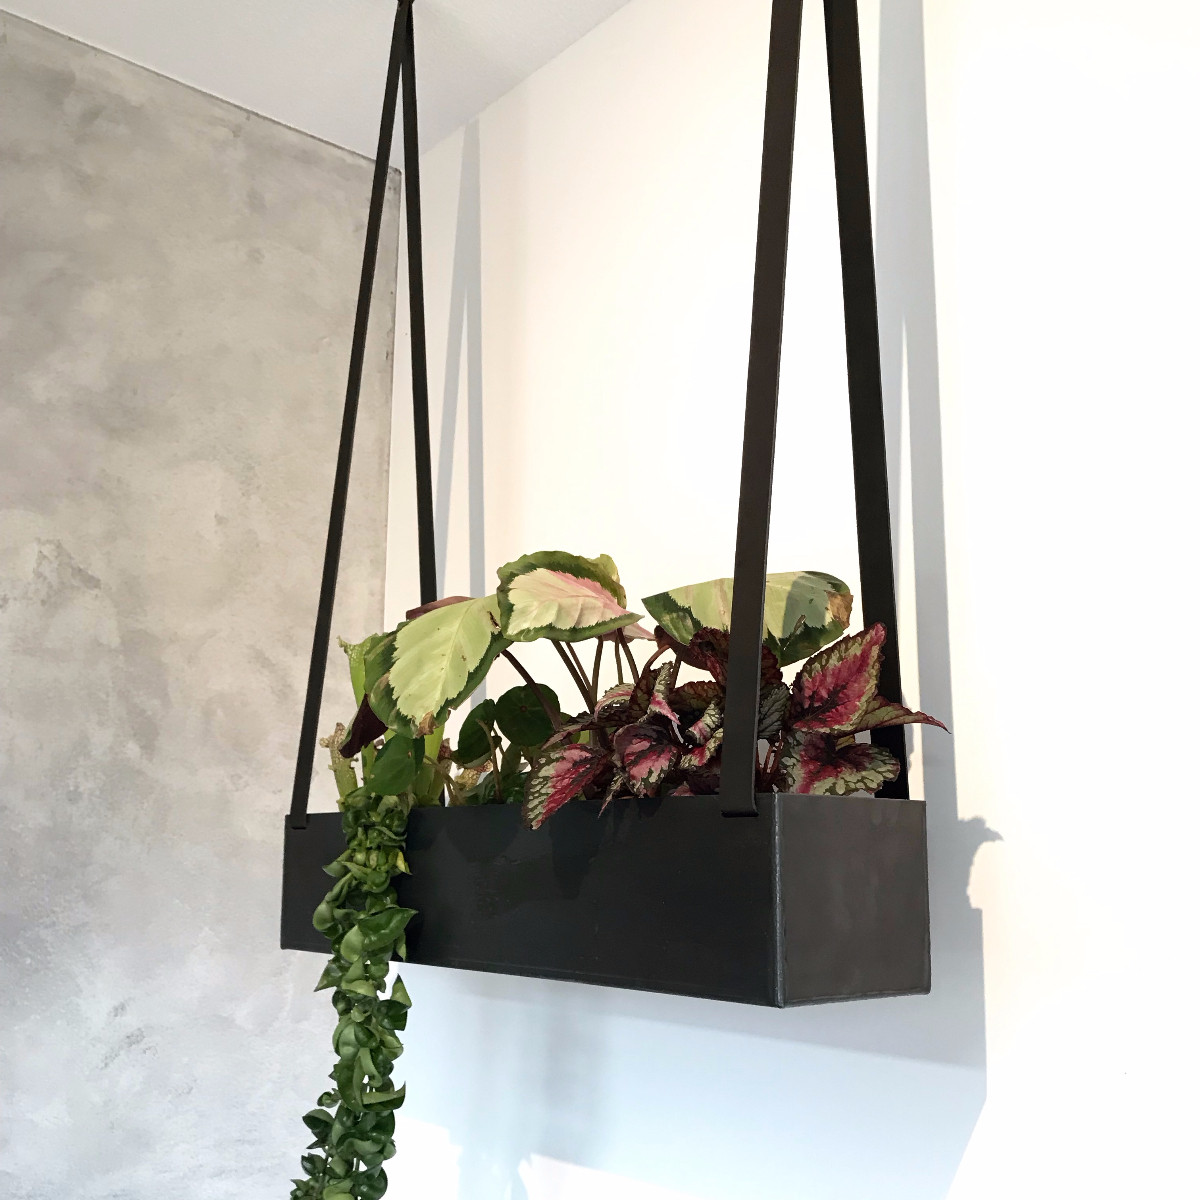 Hiel breedte plafond Unieke hangende plantenbak | Handles and more